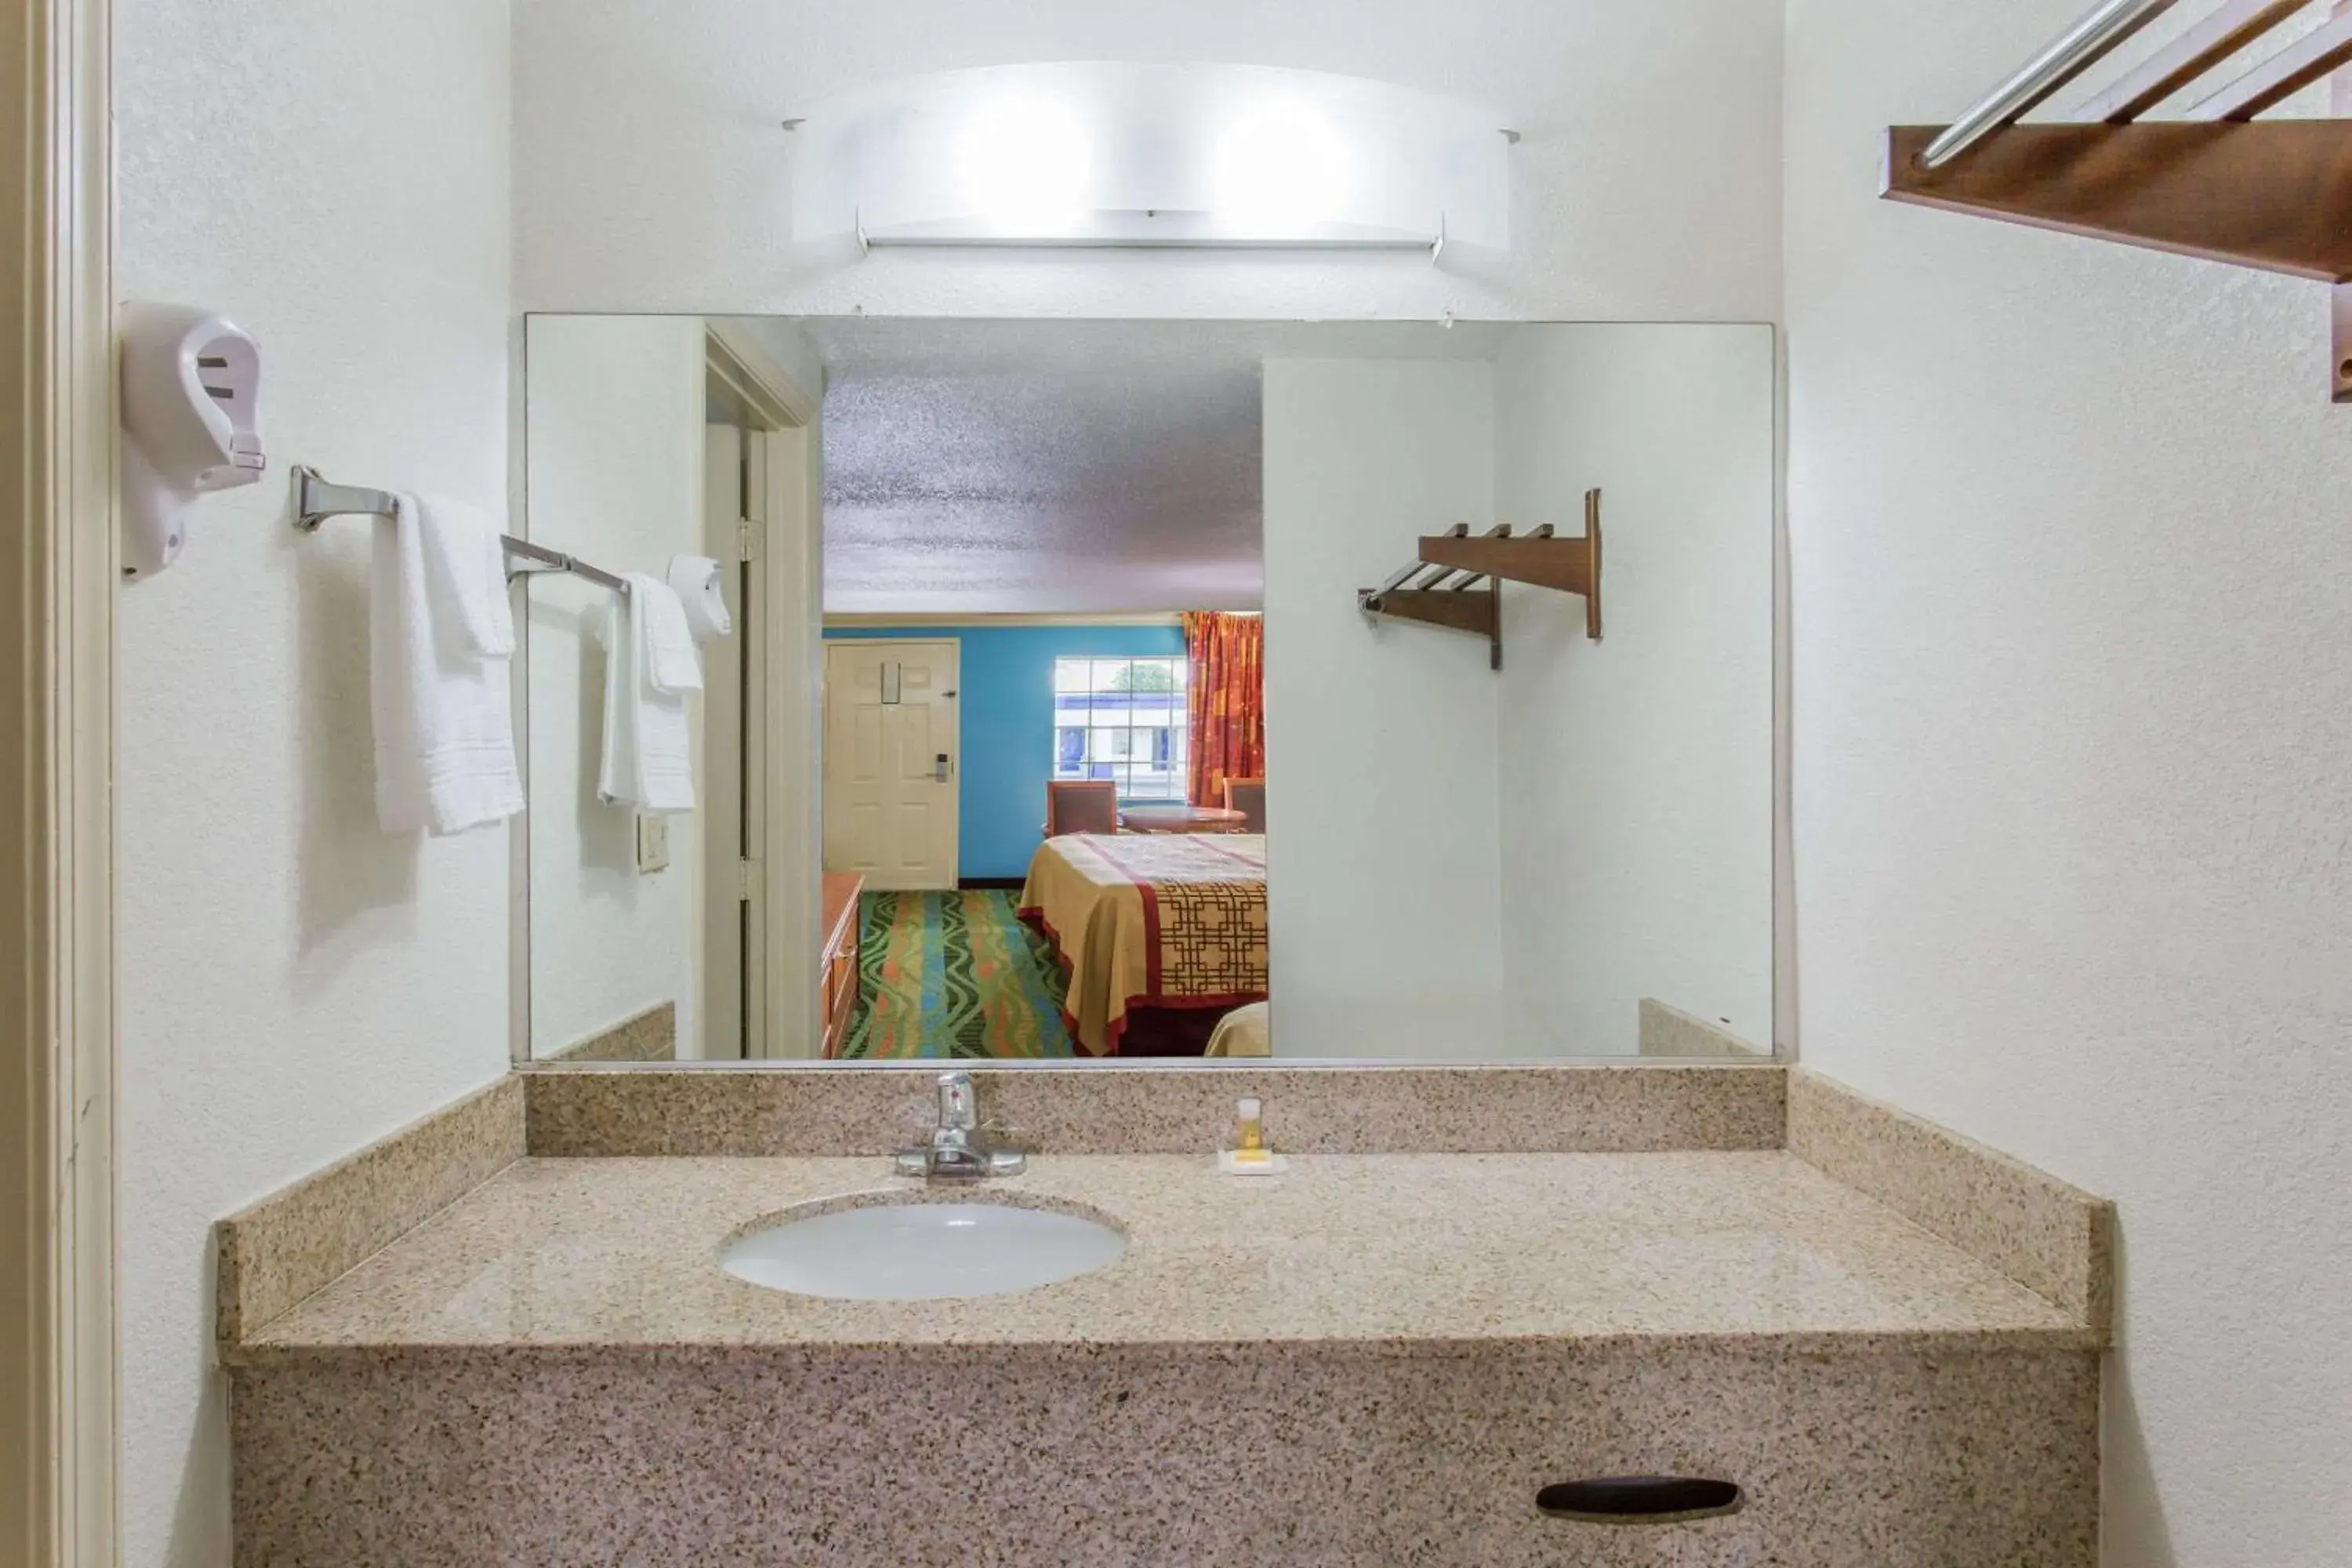 Photo of the whole room, Bathroom in Days Inn by Wyndham Virginia Beach Town Center